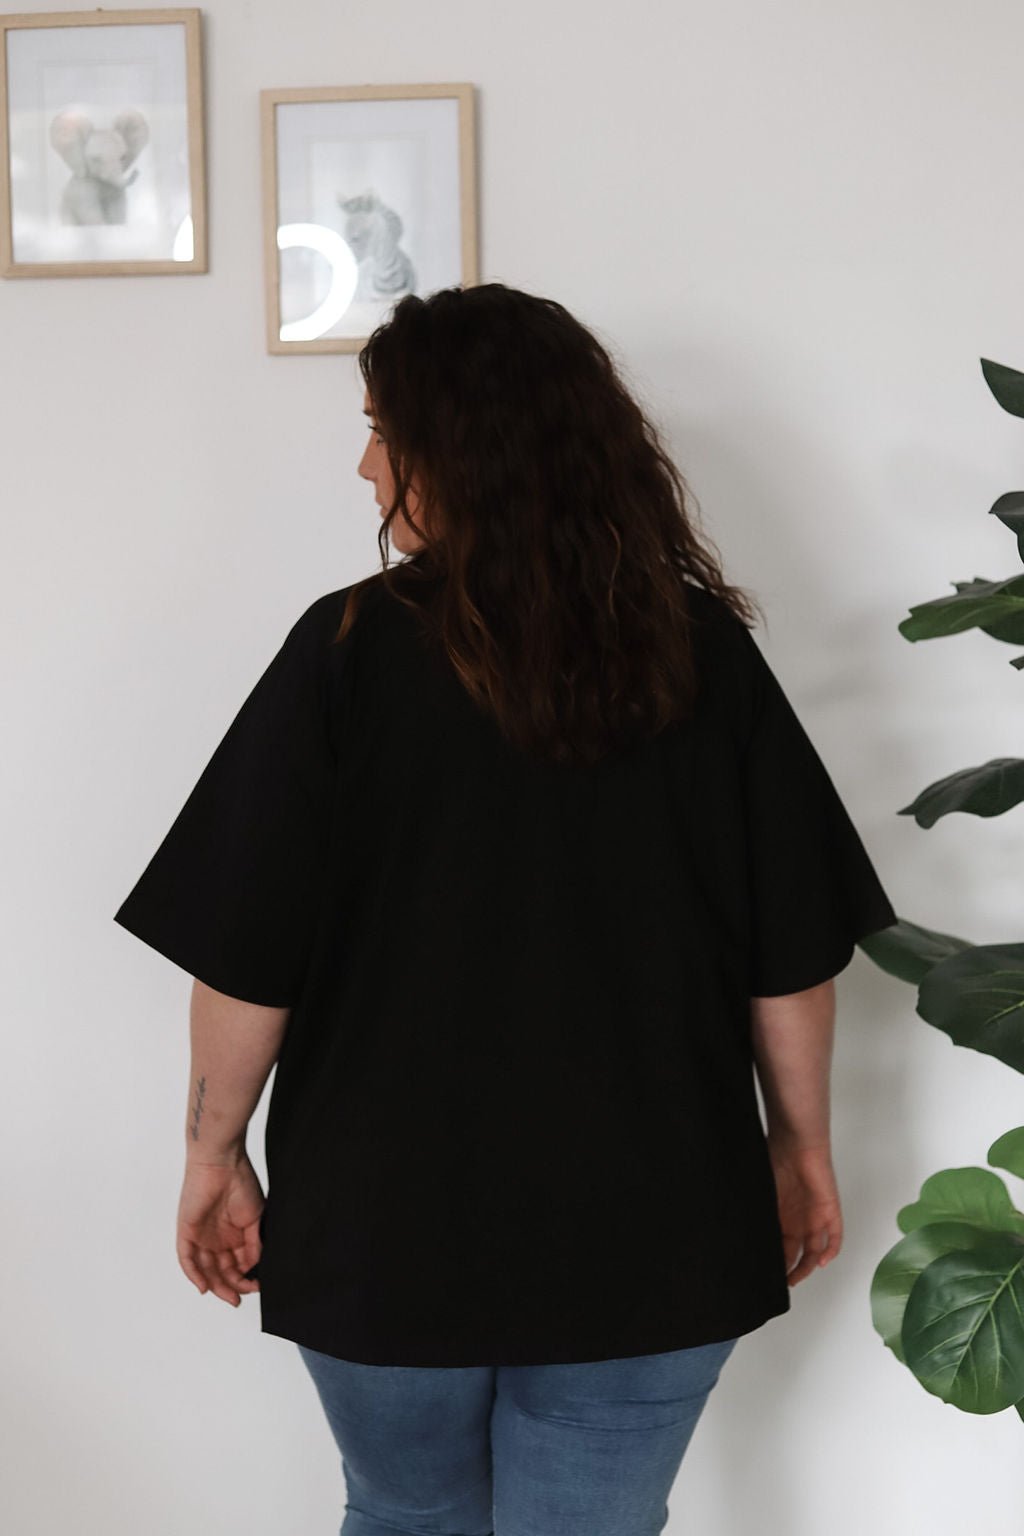 Comfortable black t-shirt with hidden zip for breastfeeding